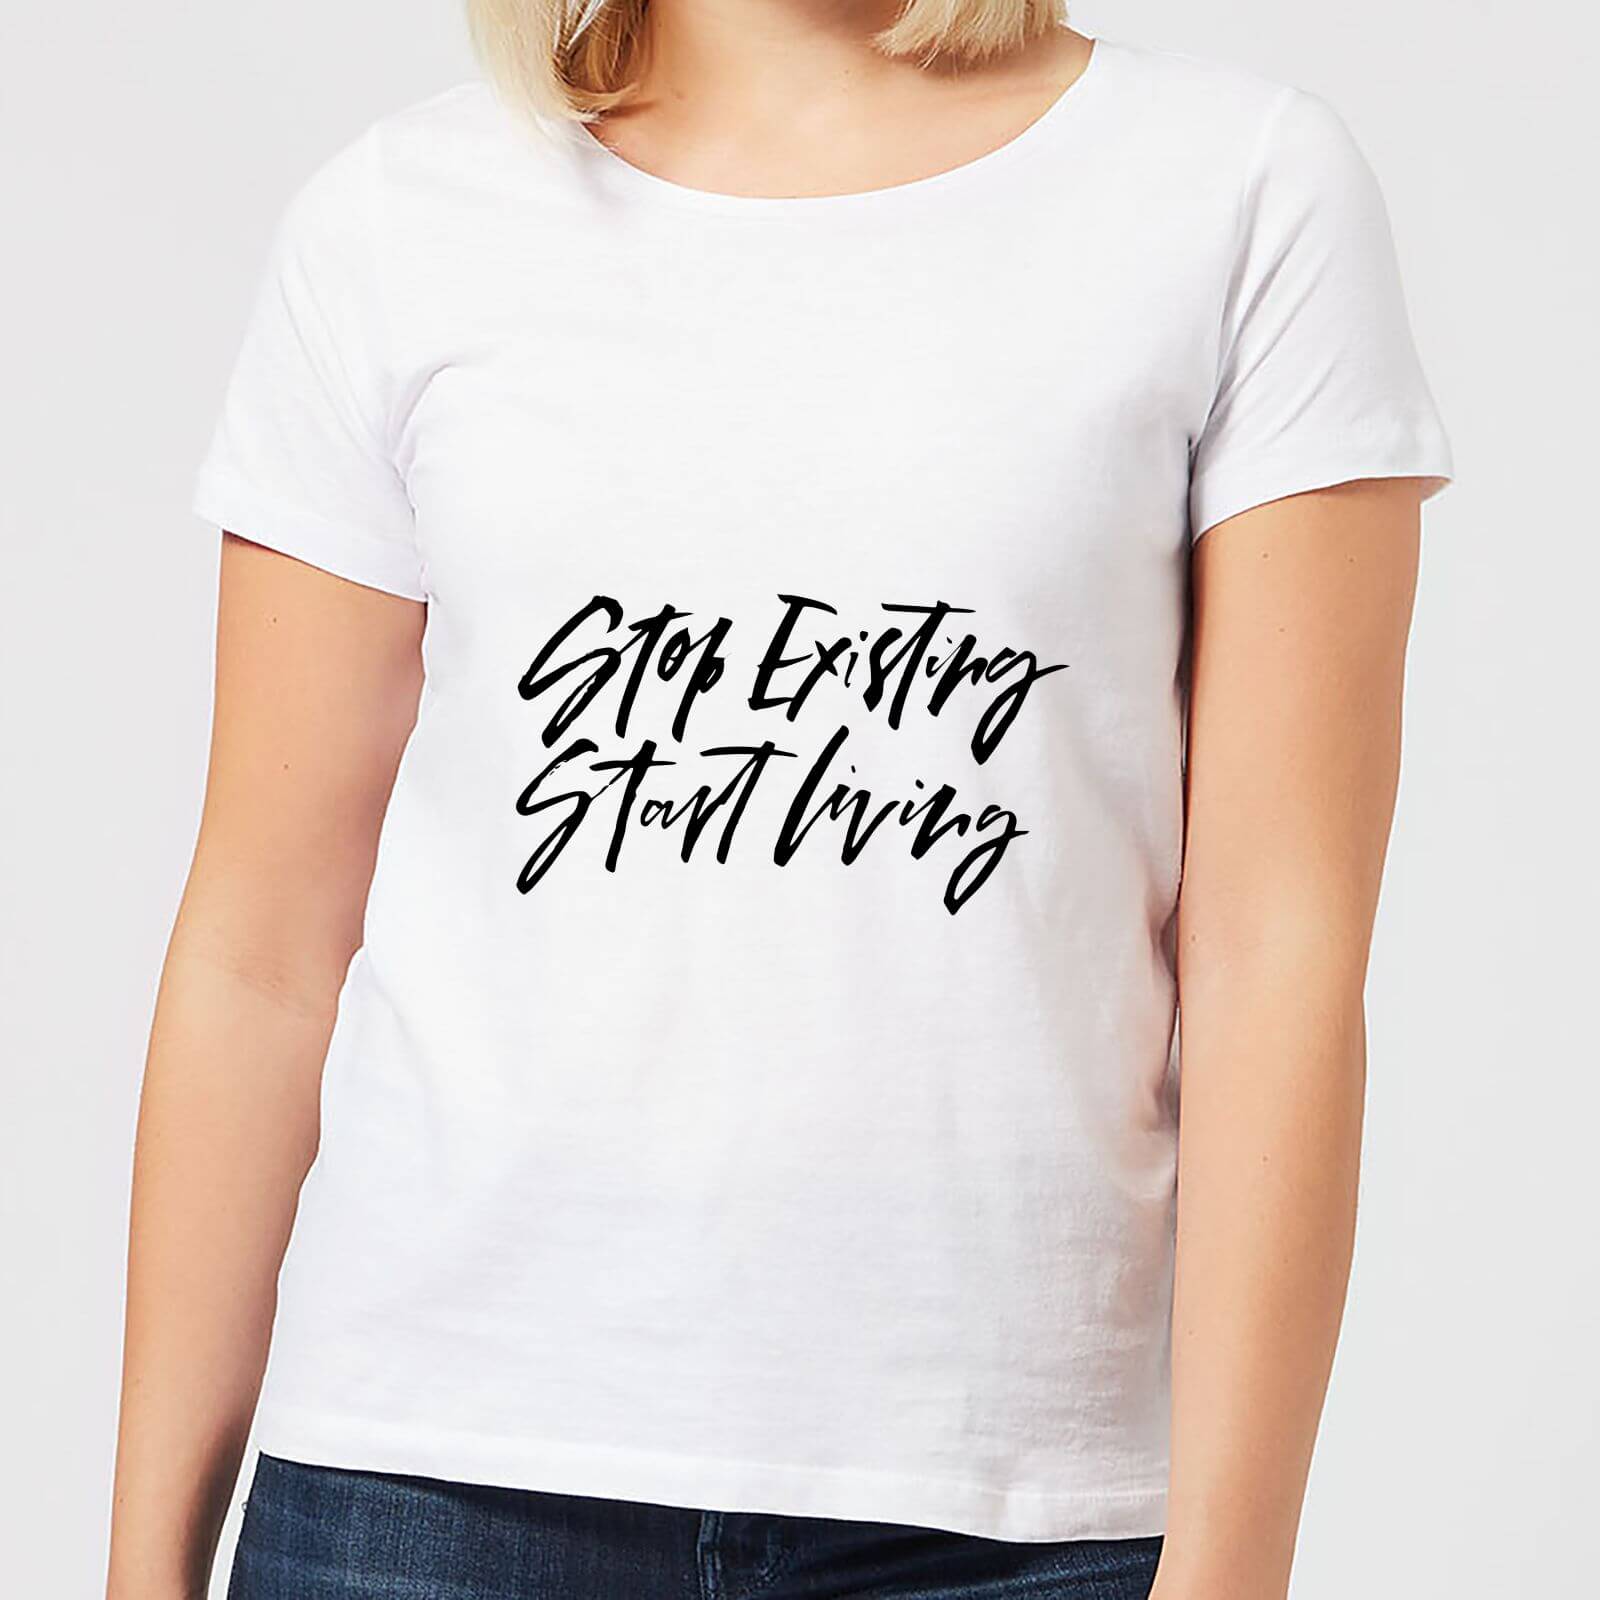 Stop Existing and Start Living Women's T-Shirt - White - S - White